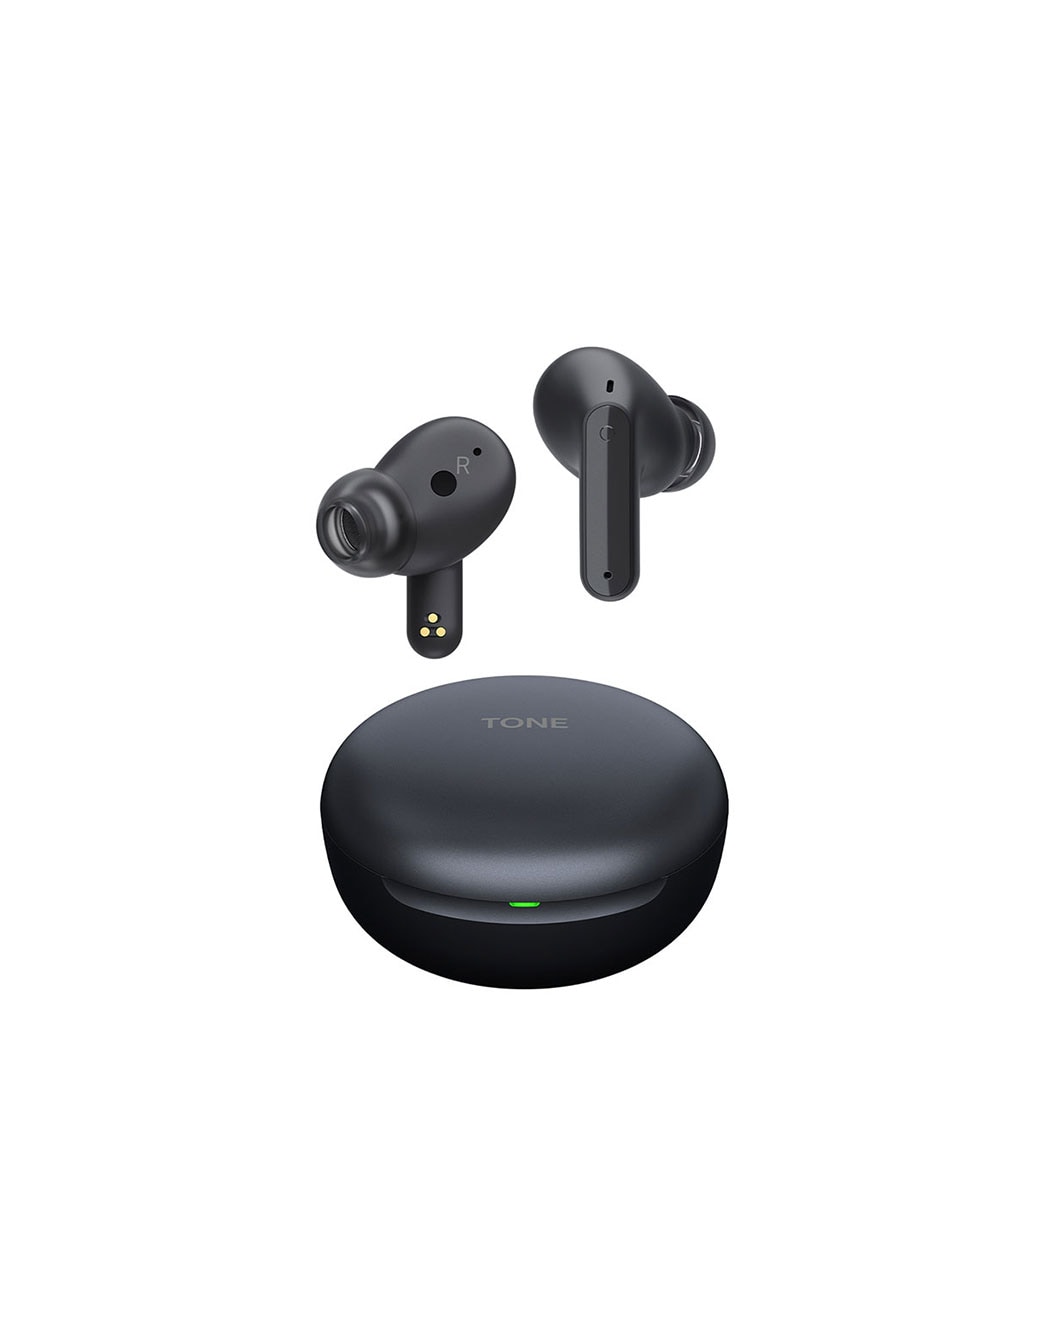 LG TONE Free FP5 - Audífonos Inalámbricos Bluetooth con Cancelación Activa  de Ruido (ANC)